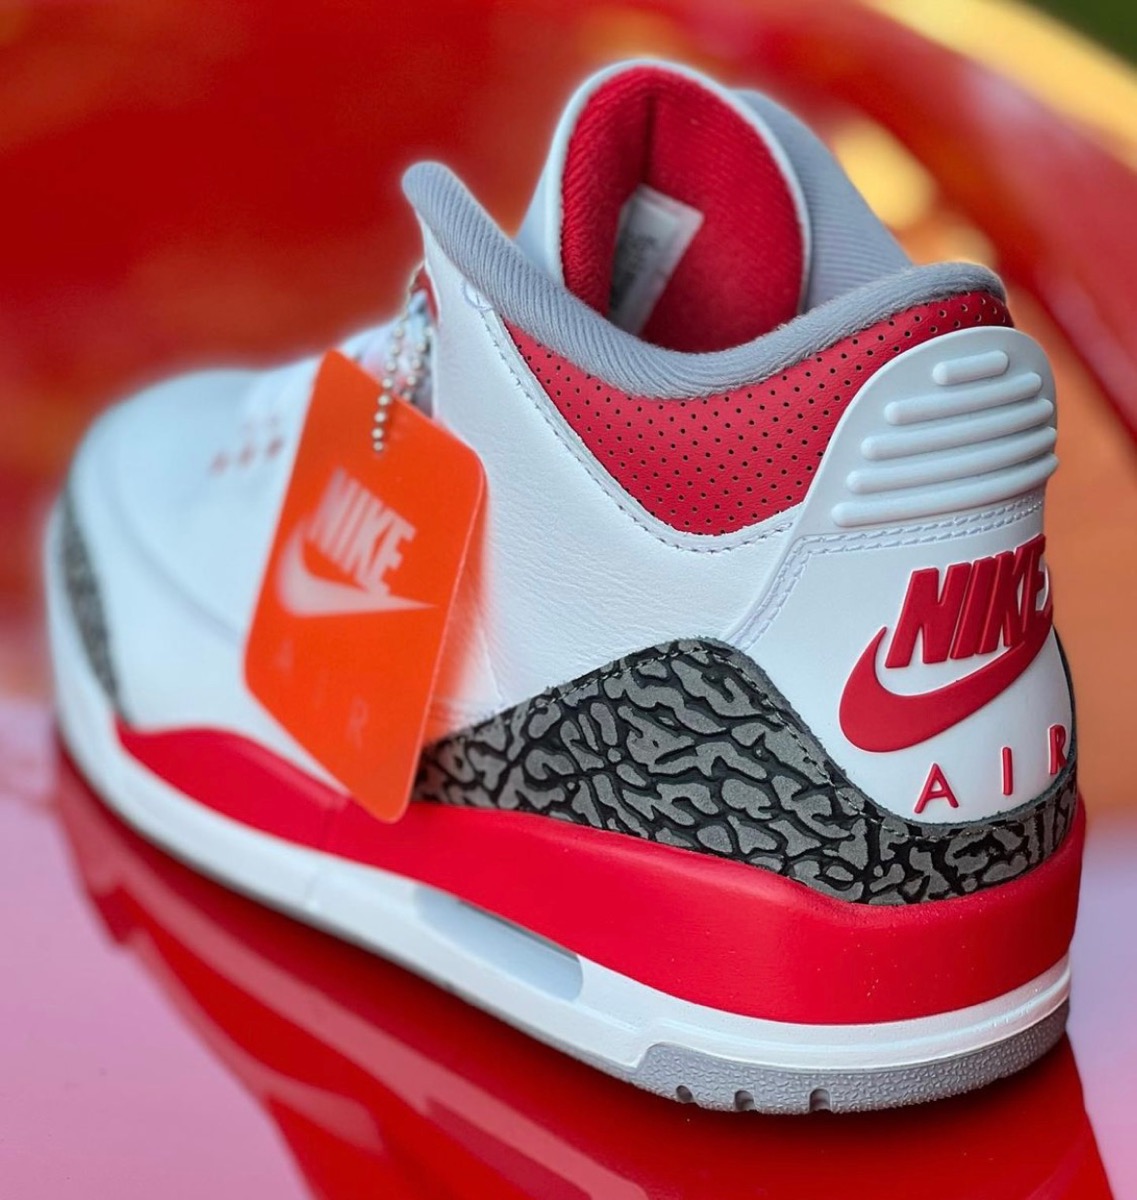 Nike】Air Jordan 3 Retro OG “Fire Red”が国内8月6日に復刻発売予定 